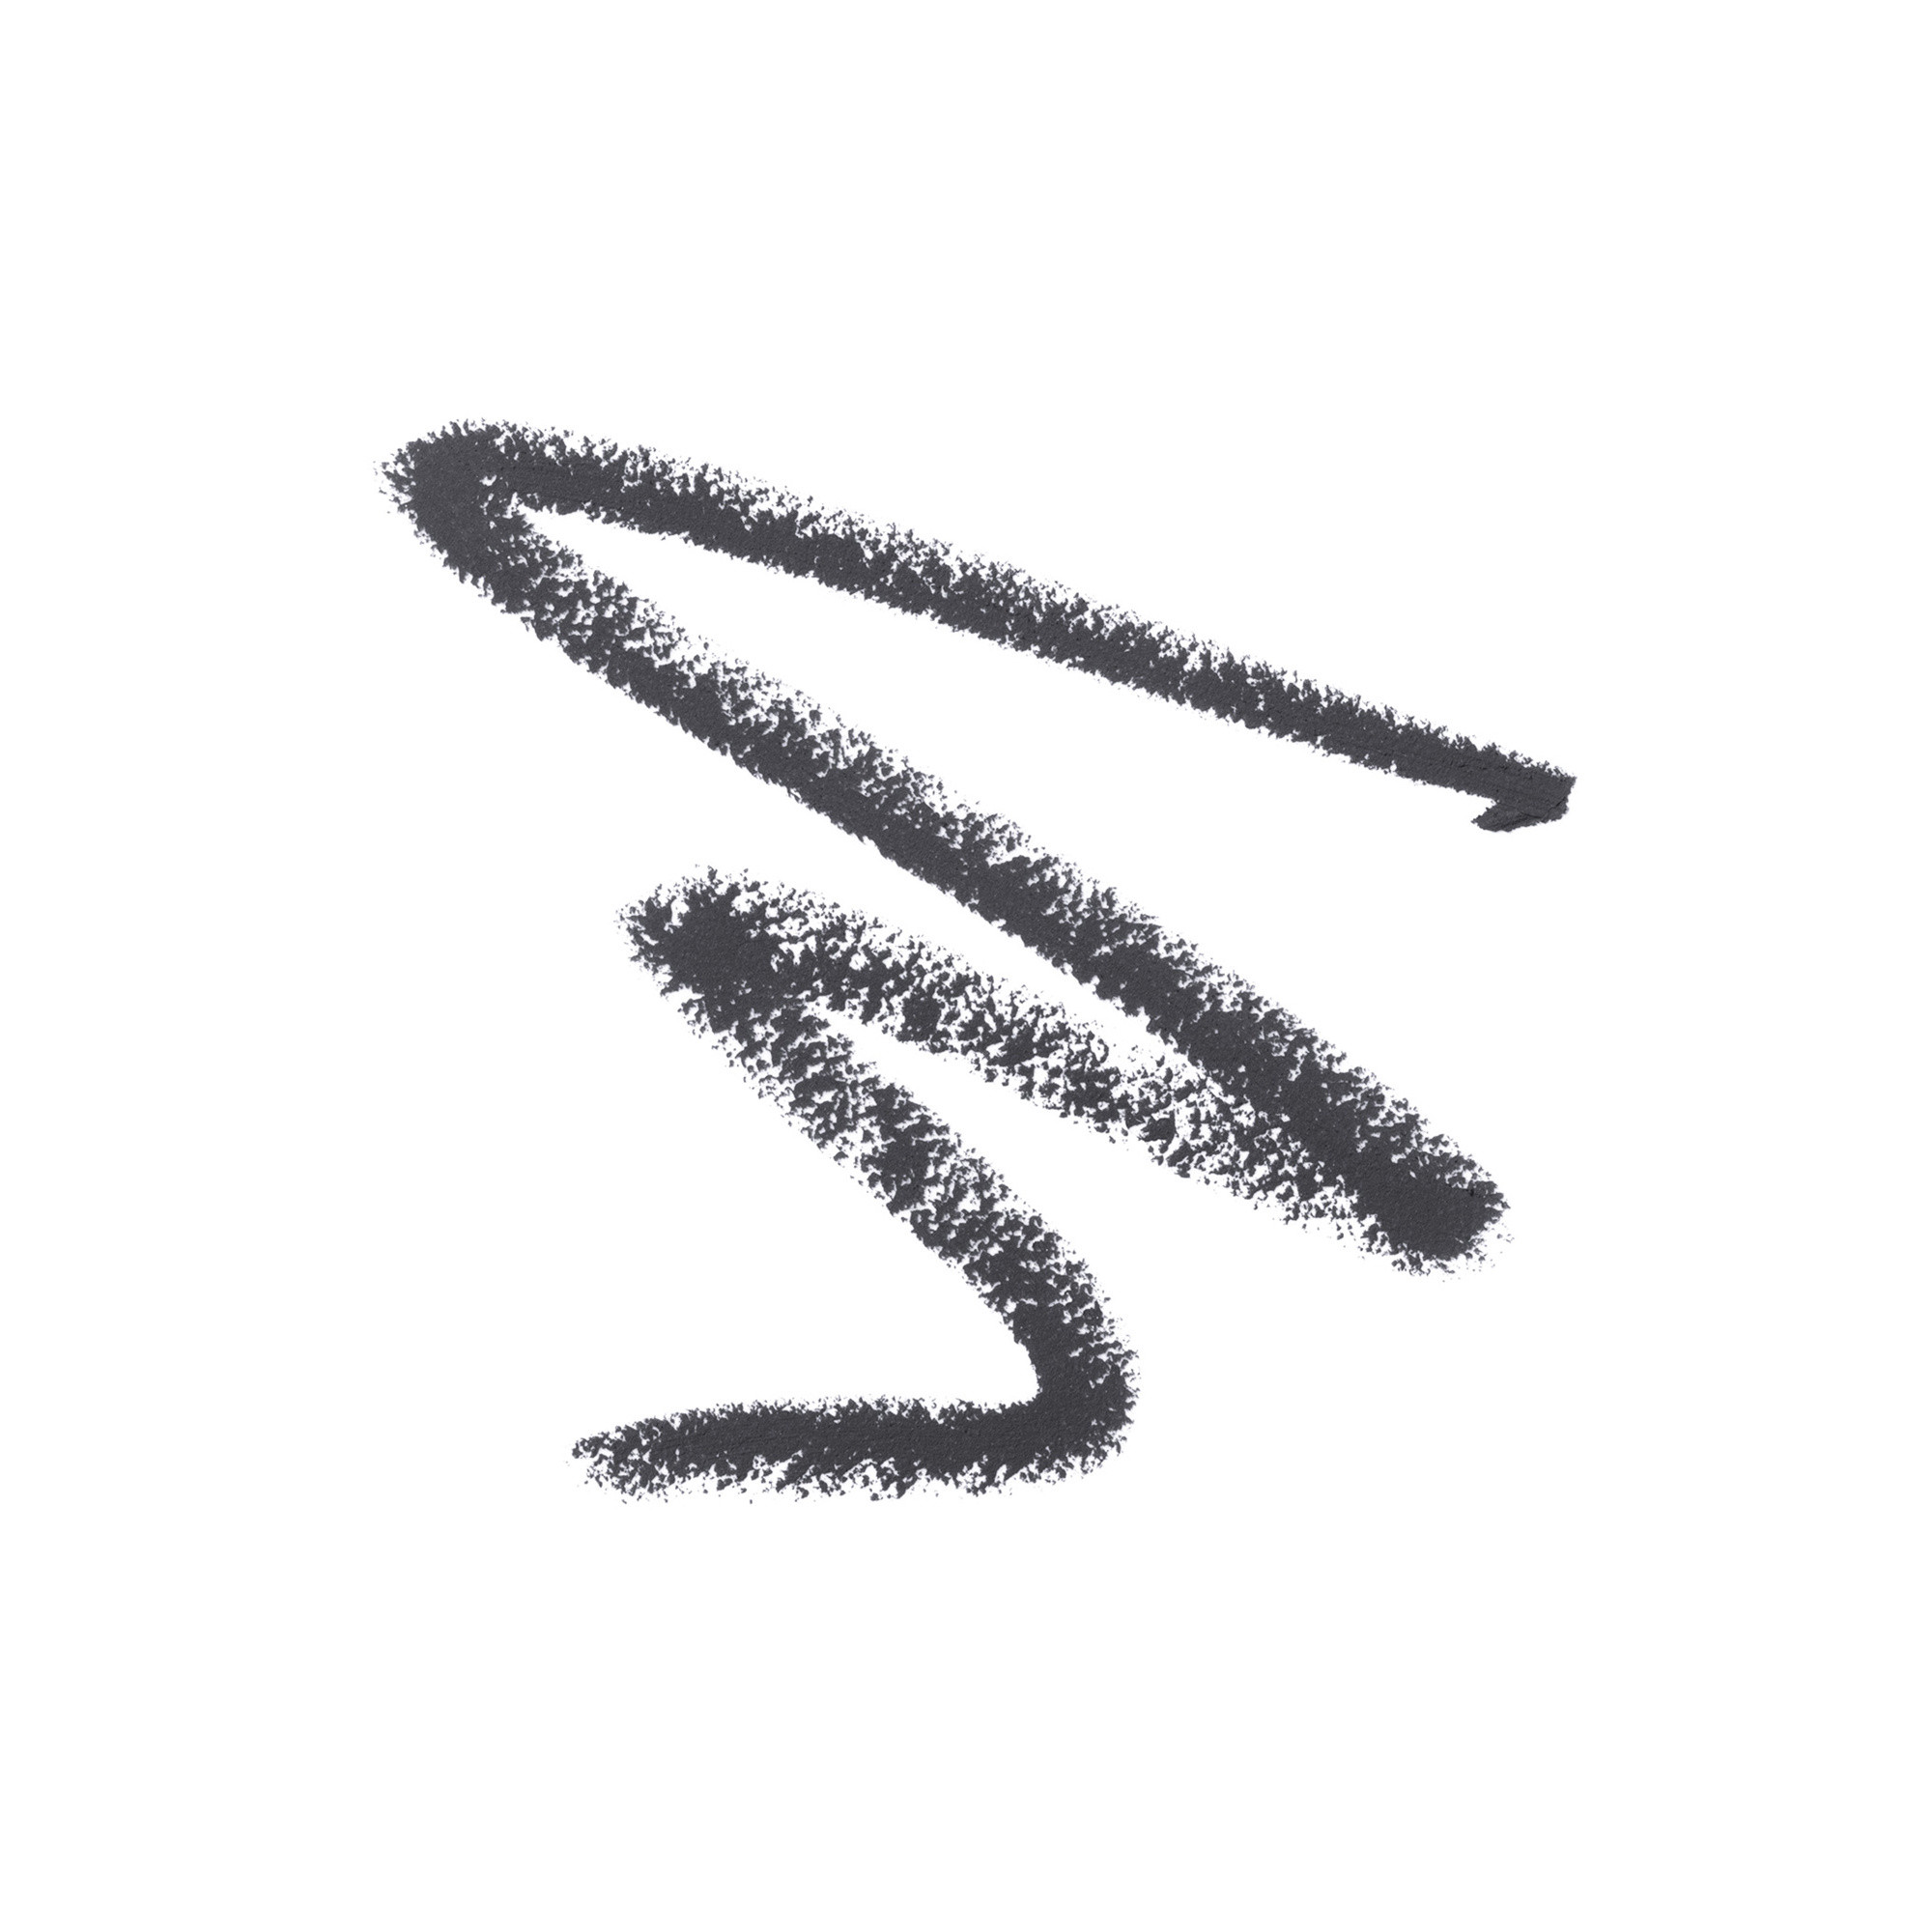 Estée Lauder double wear infinite waterproof eyeliner - kohl noir 35 g, , large image number 1